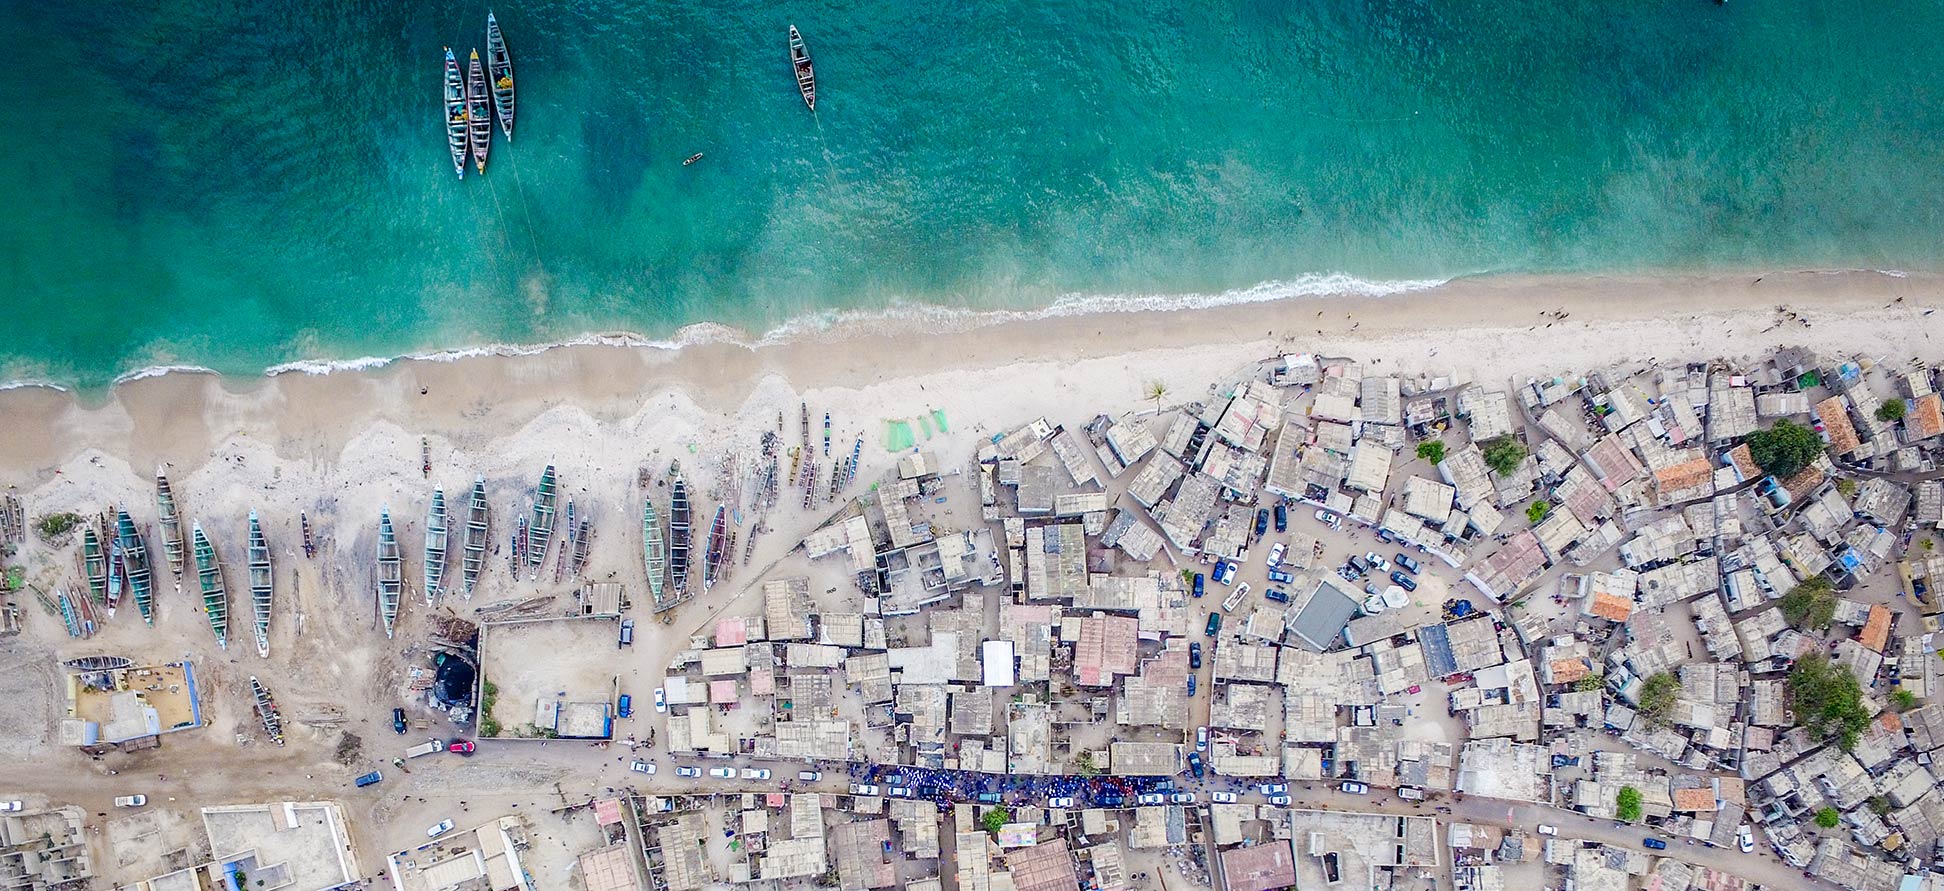 Bargny, a coastal fishing town in Senegal